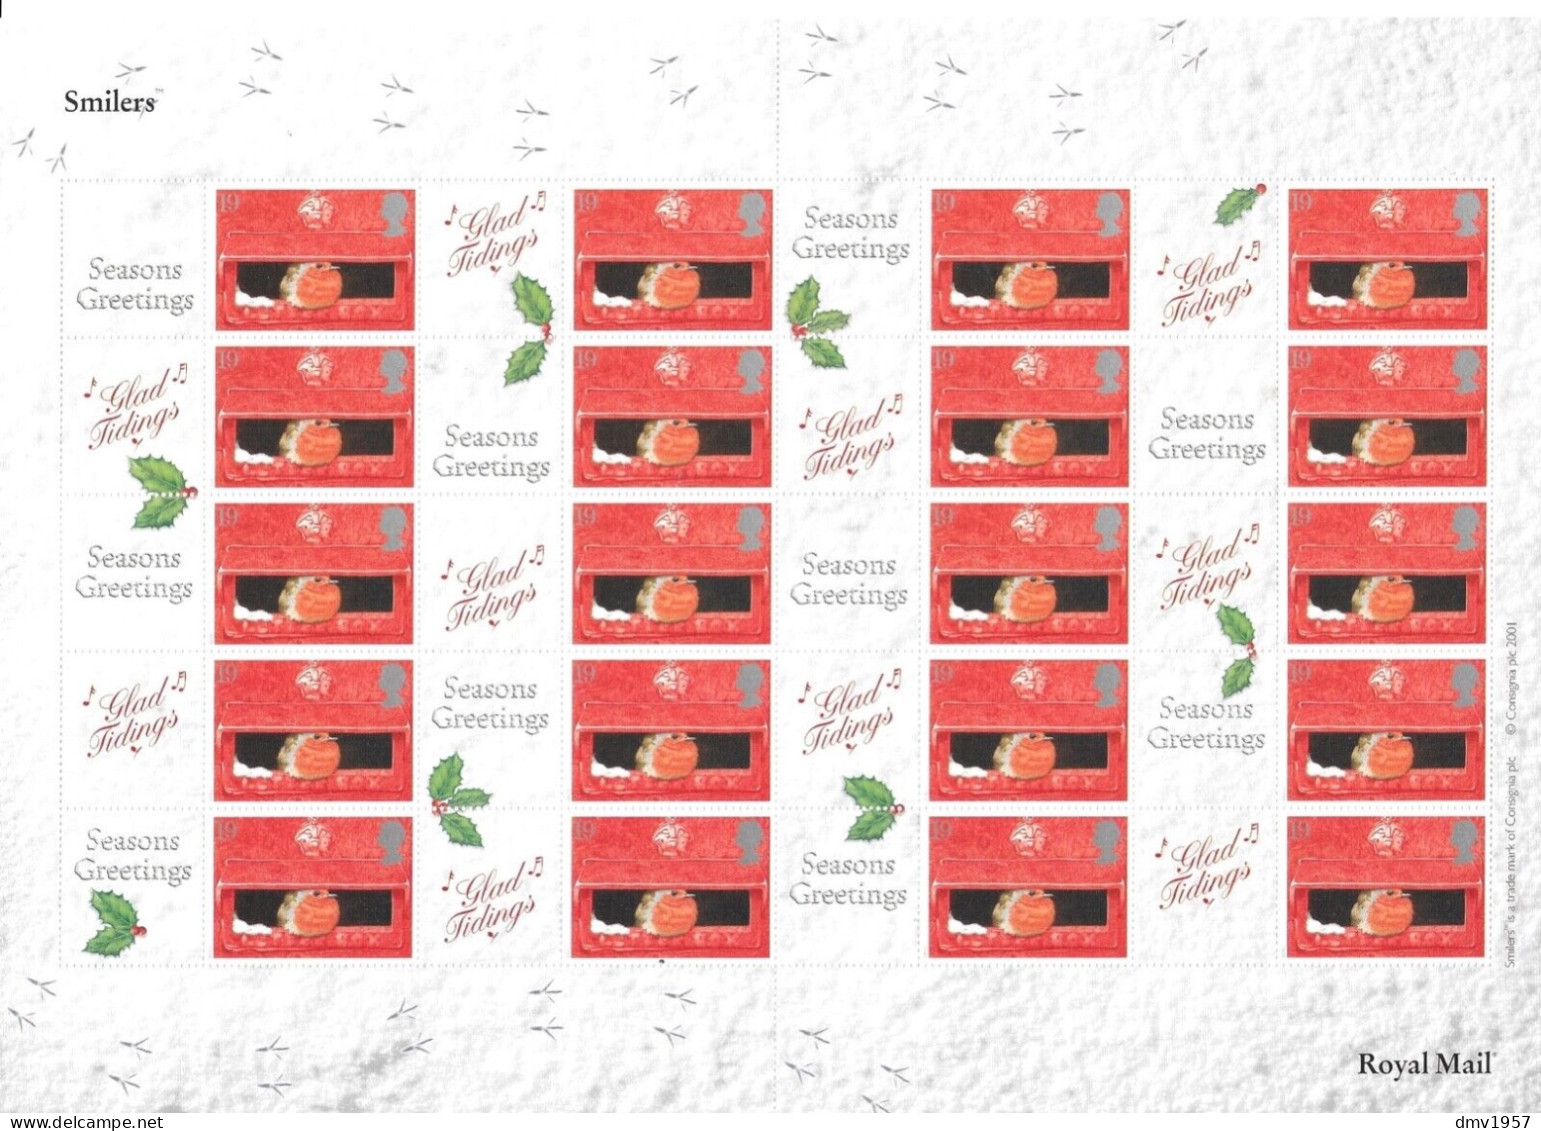 Great Britain 2001 MNH Christmas Robins (19p X 20) Consignia Smiler Sheet LS2A Cat £600 - Sheets, Plate Blocks & Multiples